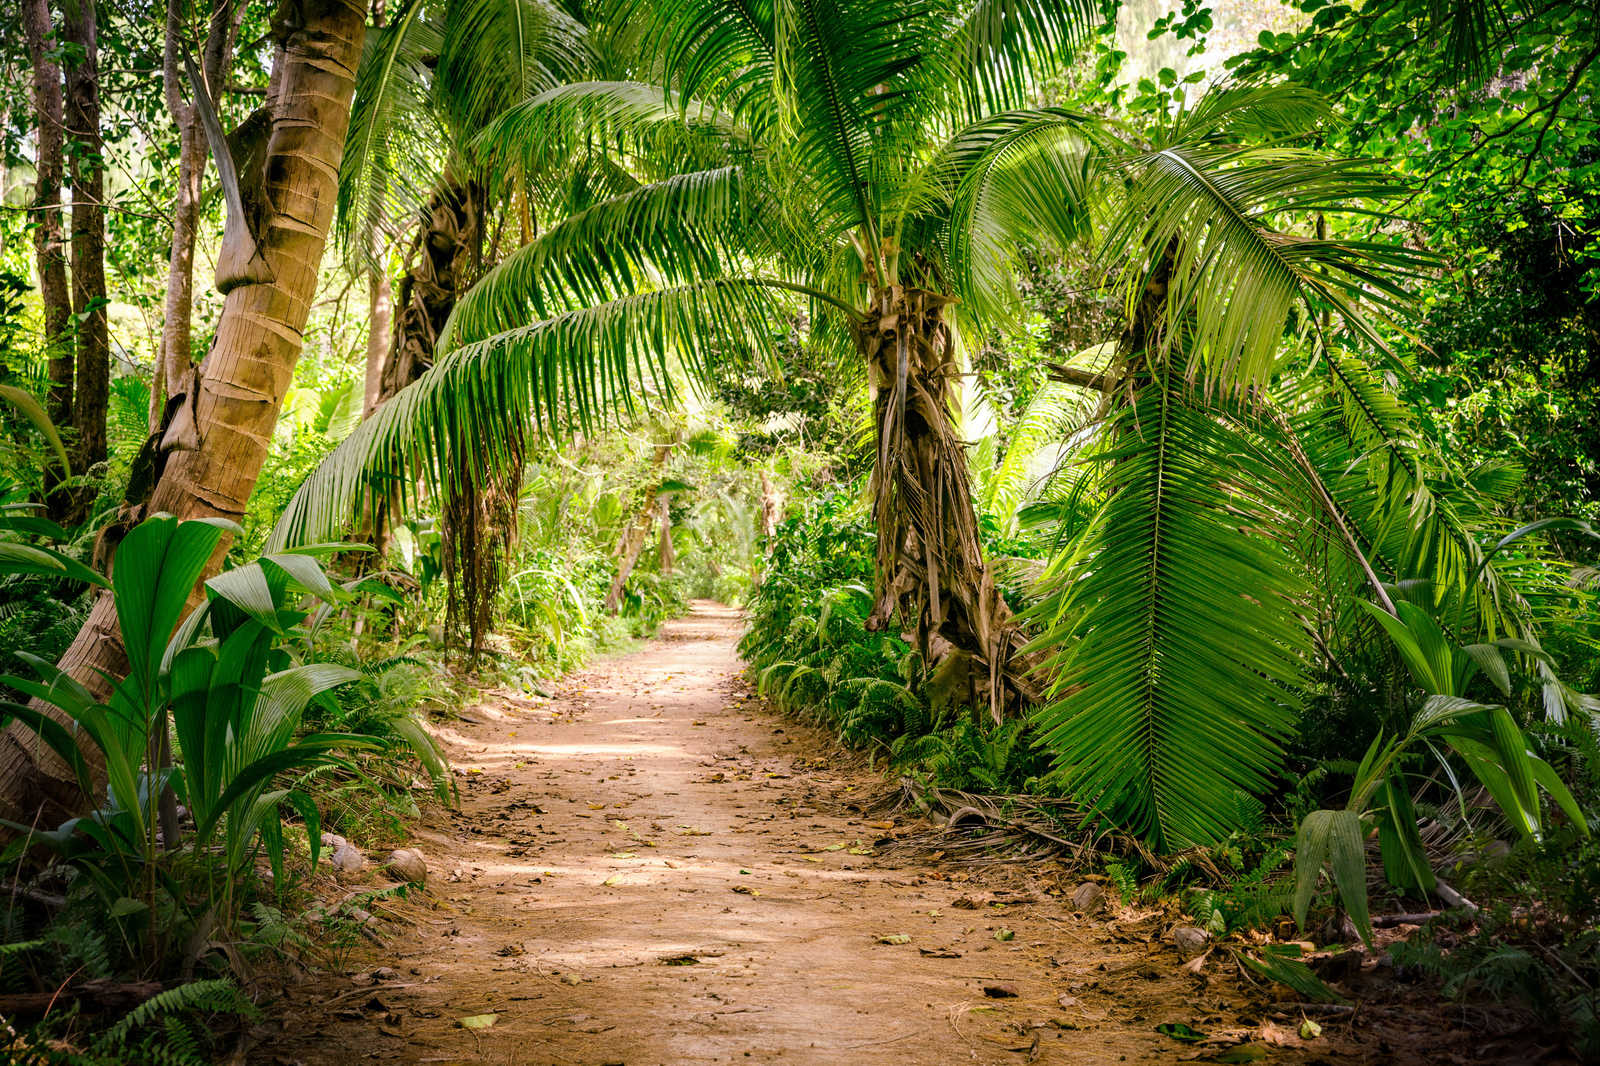             Canvas with palm tree path through a tropical landscape - 0.90 m x 0.60 m
        